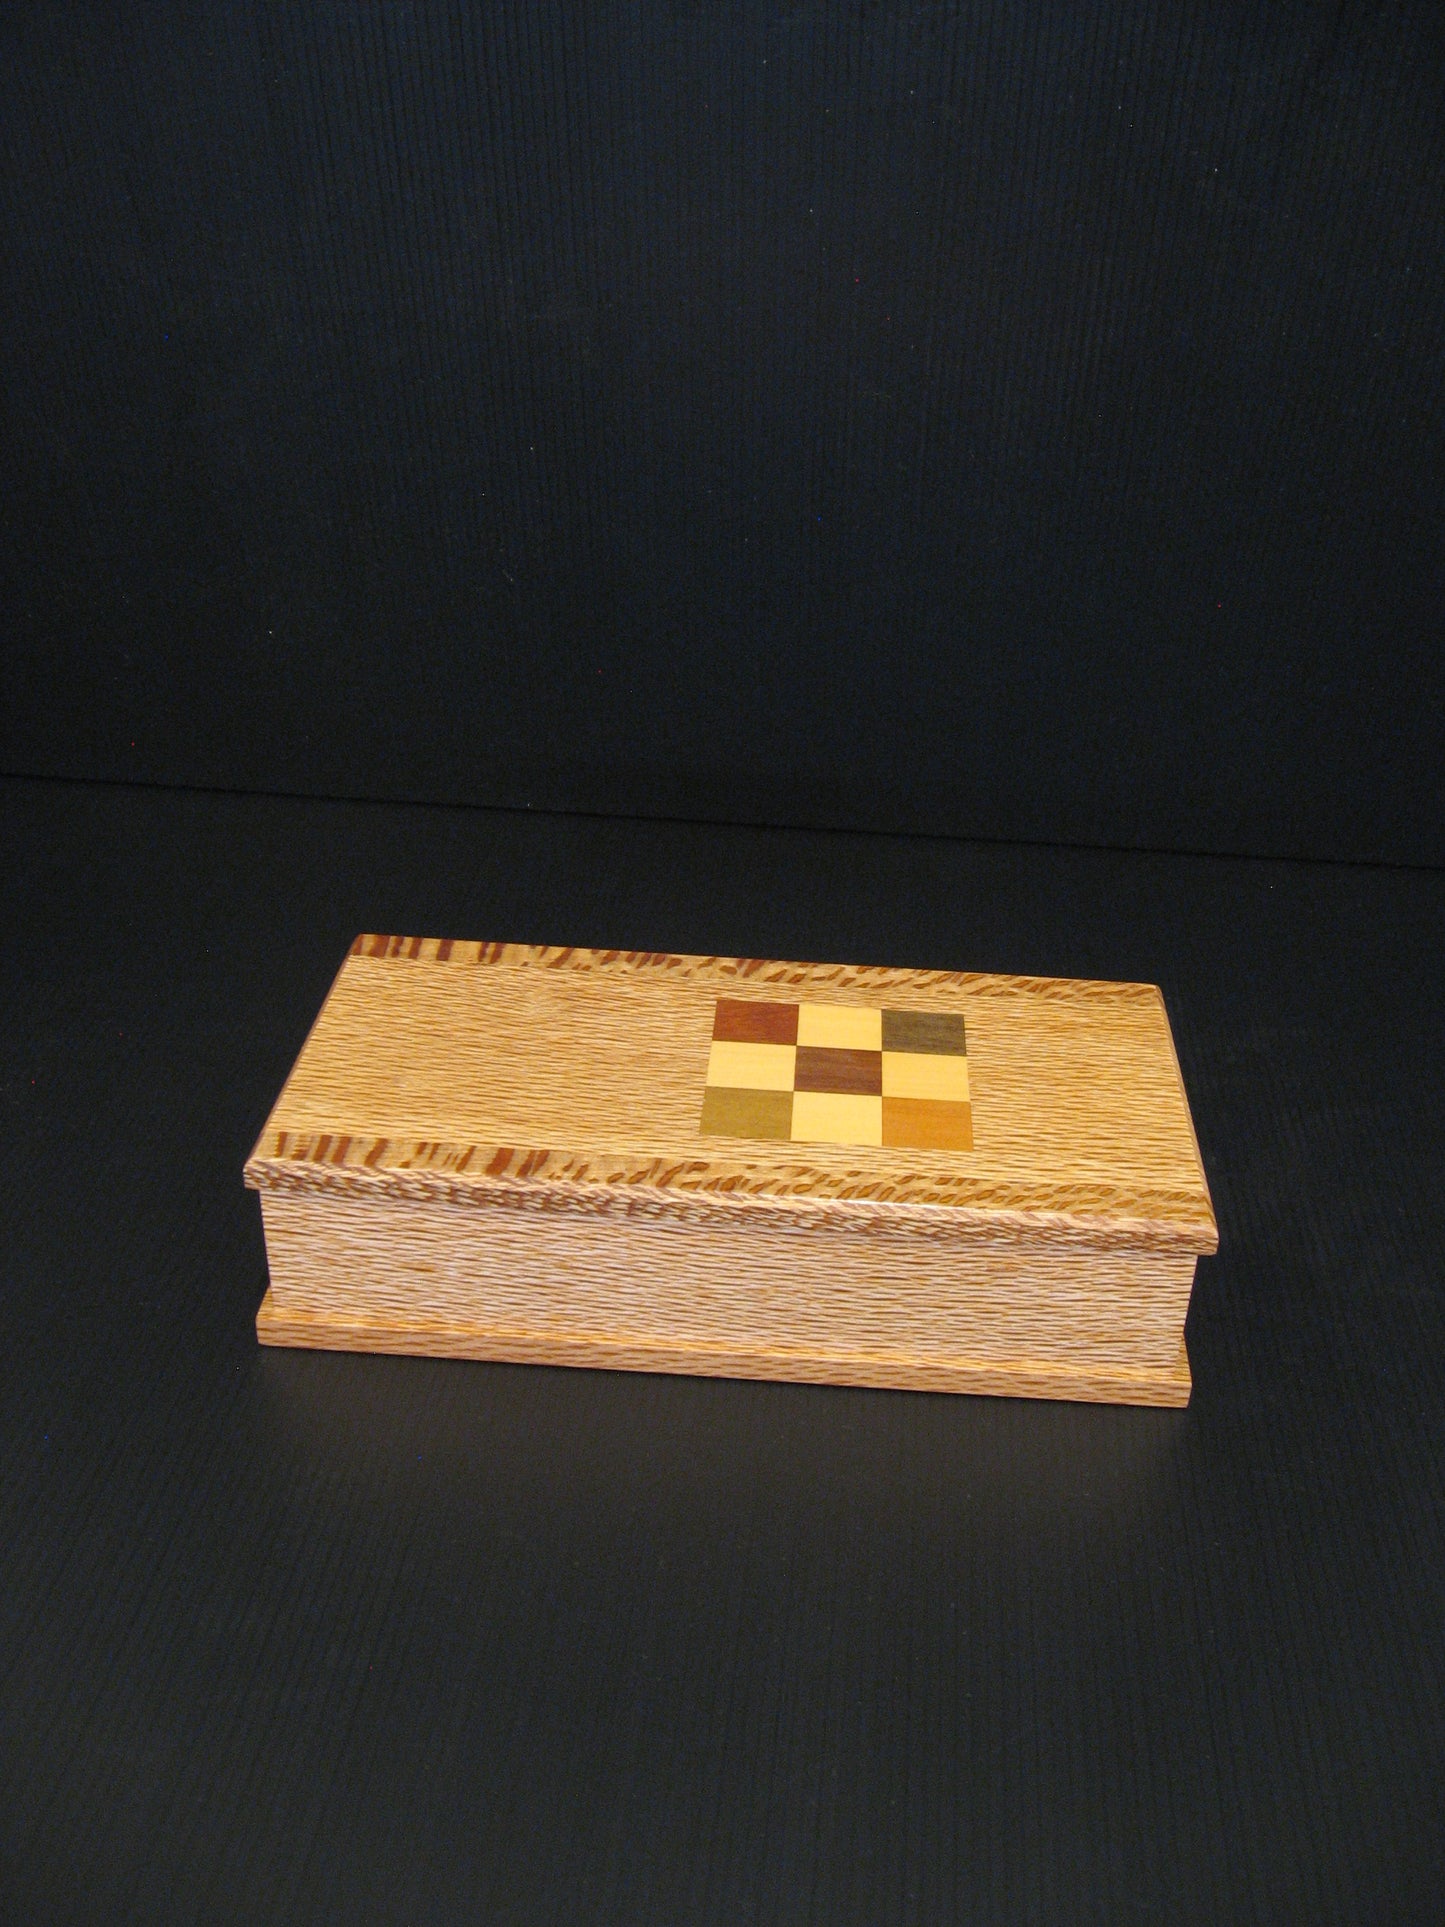 Rewarewa Wood Box by Timber Arts Silver Fern Gallery